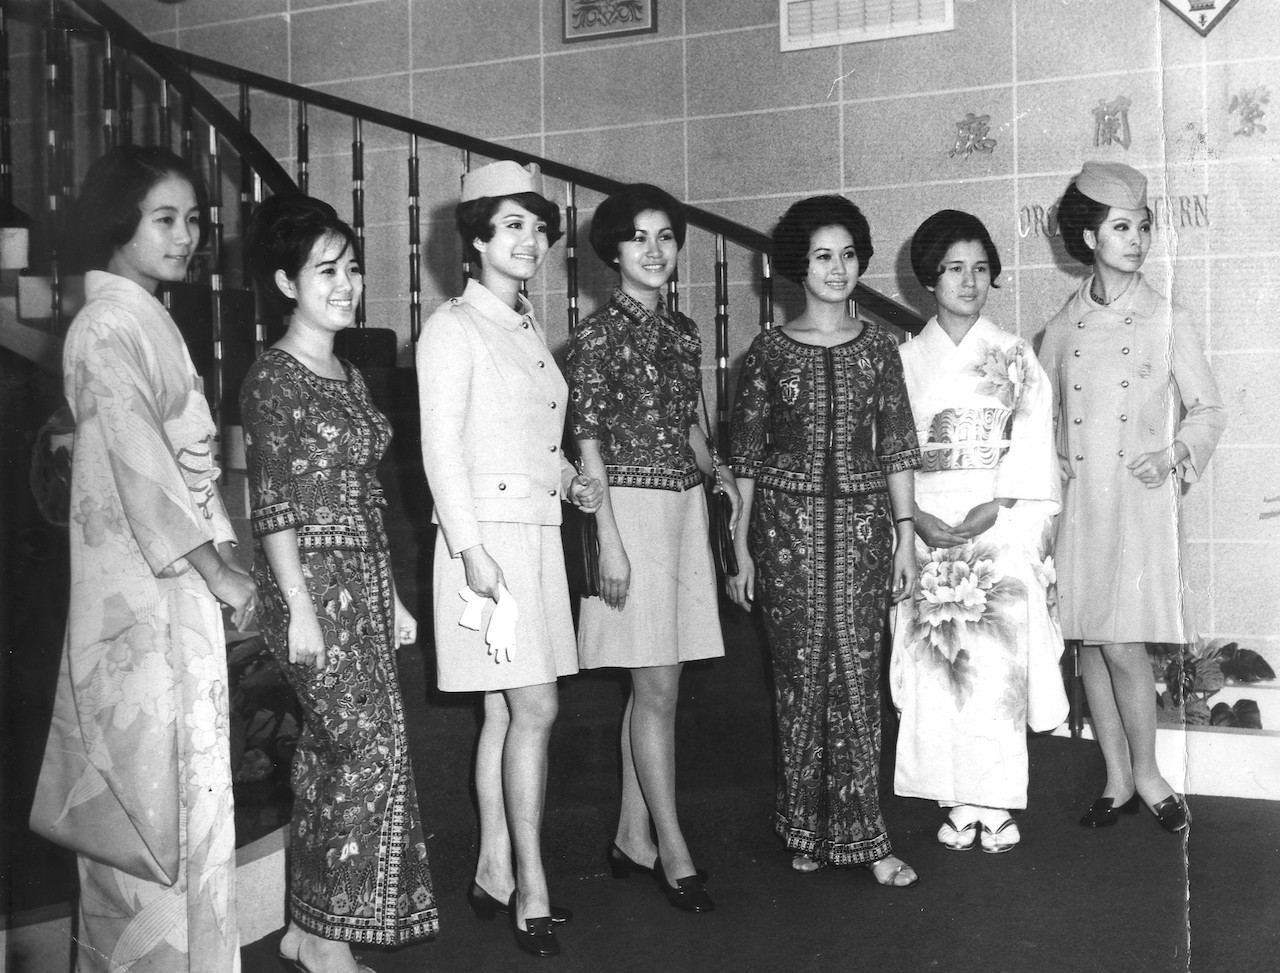 Flight attendants and ground staff posing with Japanese women